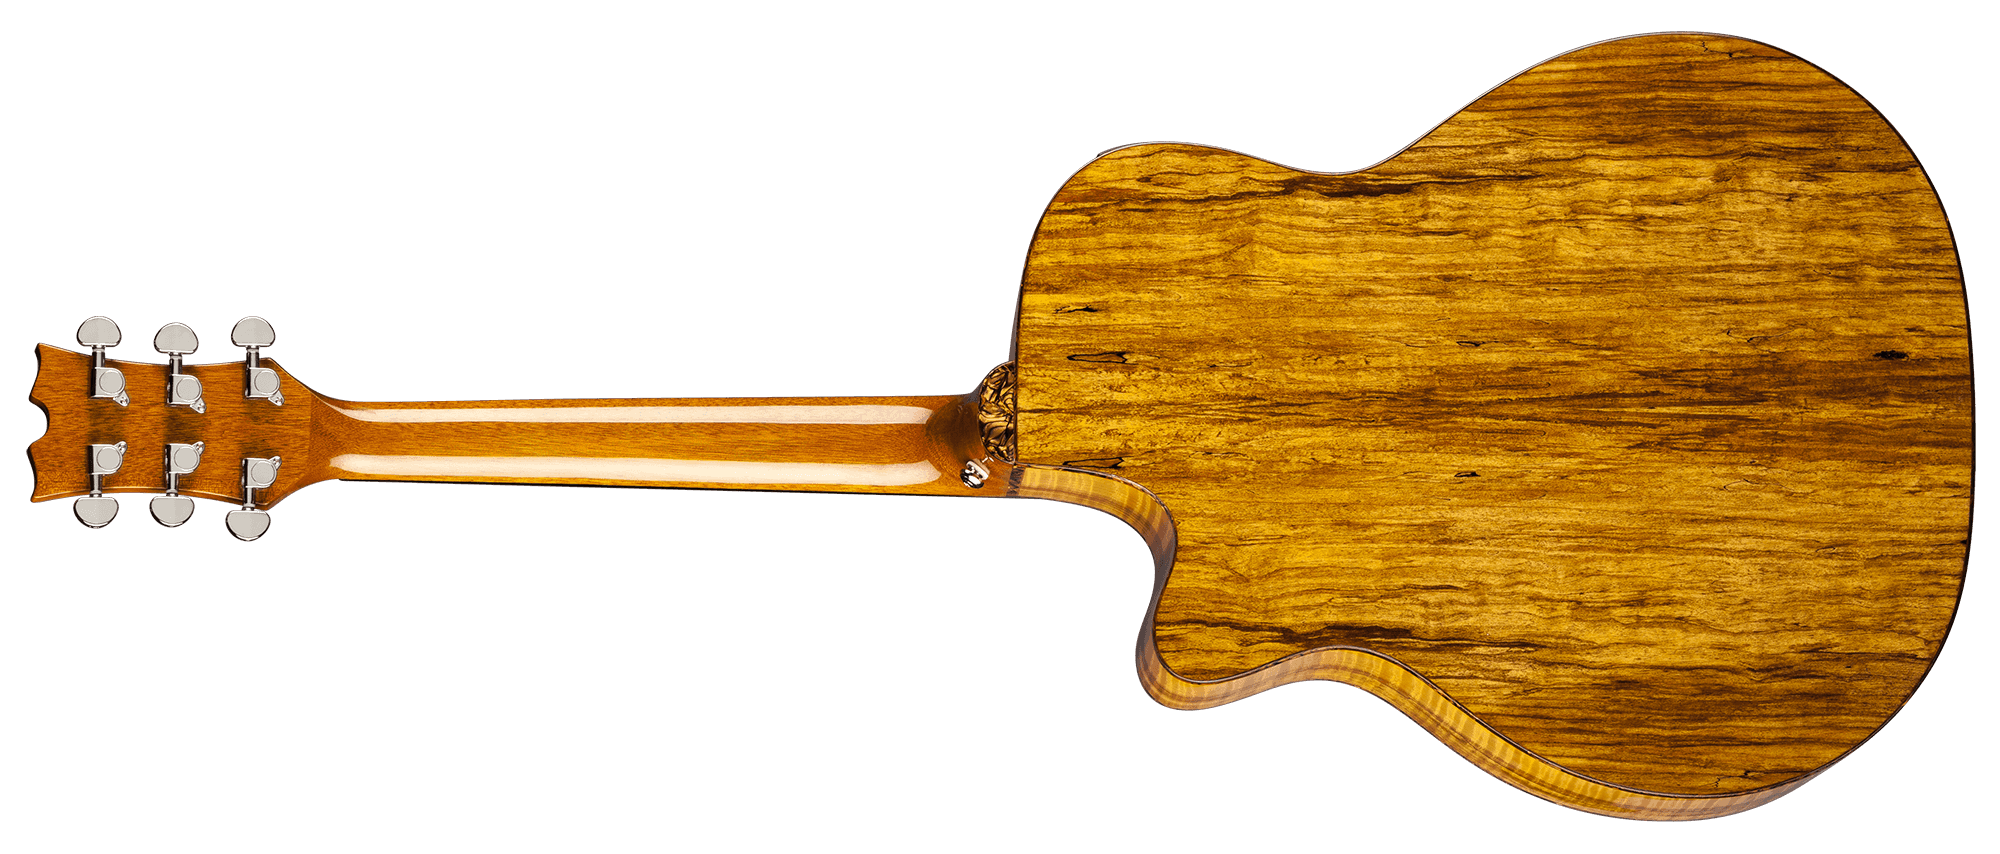 Exotica a e spalt. Clipart guitar orange guitar